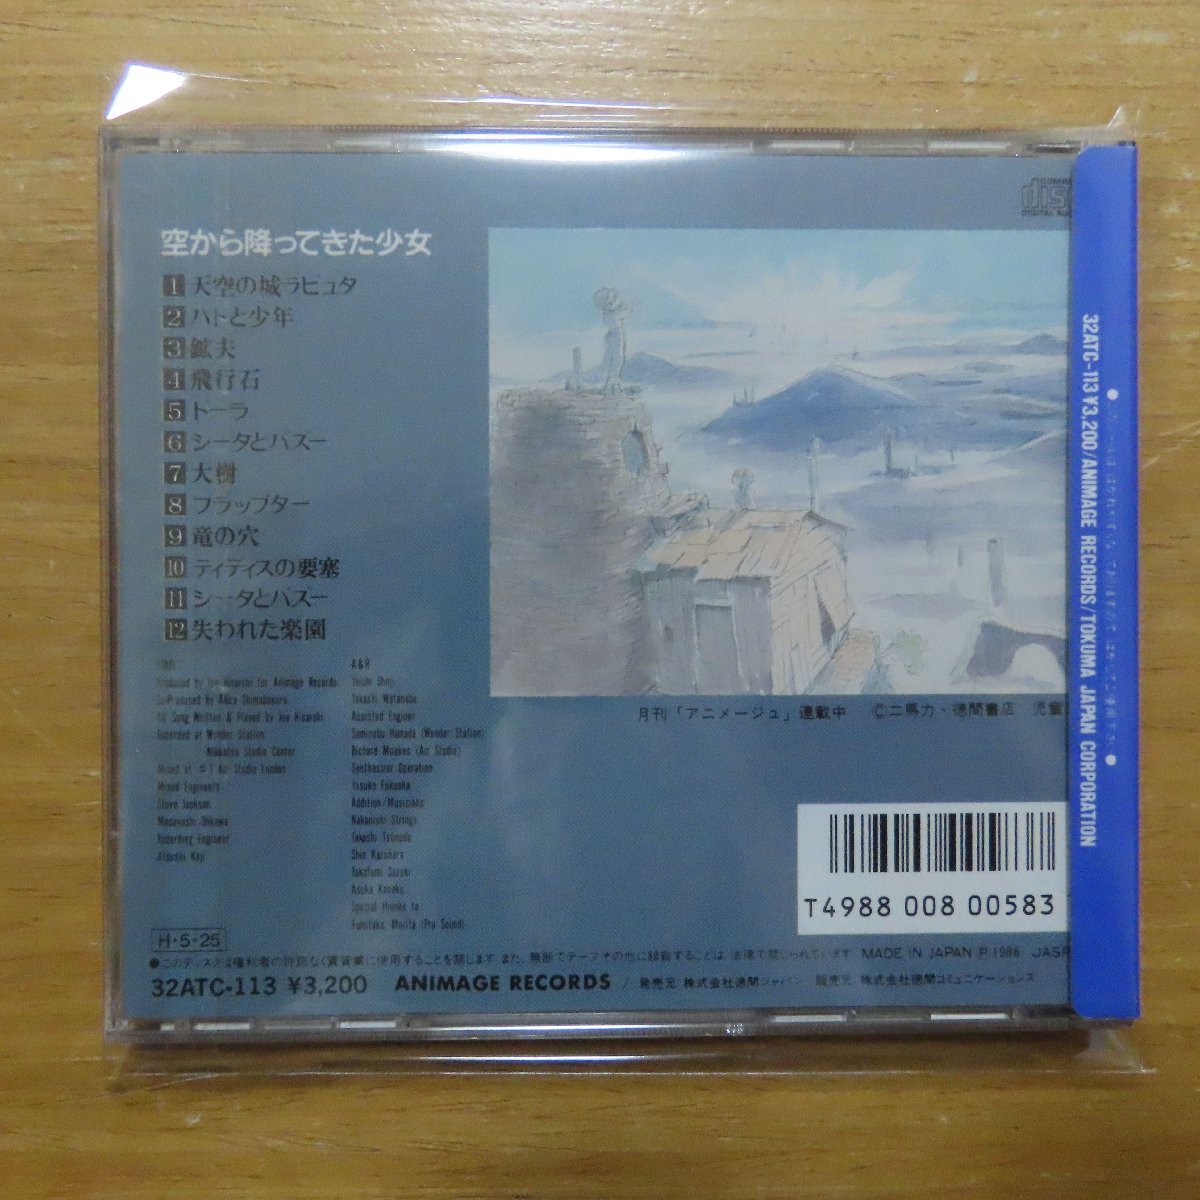 4988008005837;[CD/ seal obi / tax inscription less ] anime * soundtrack / heaven empty. castle Laputa - empty from ..... young lady - image album 